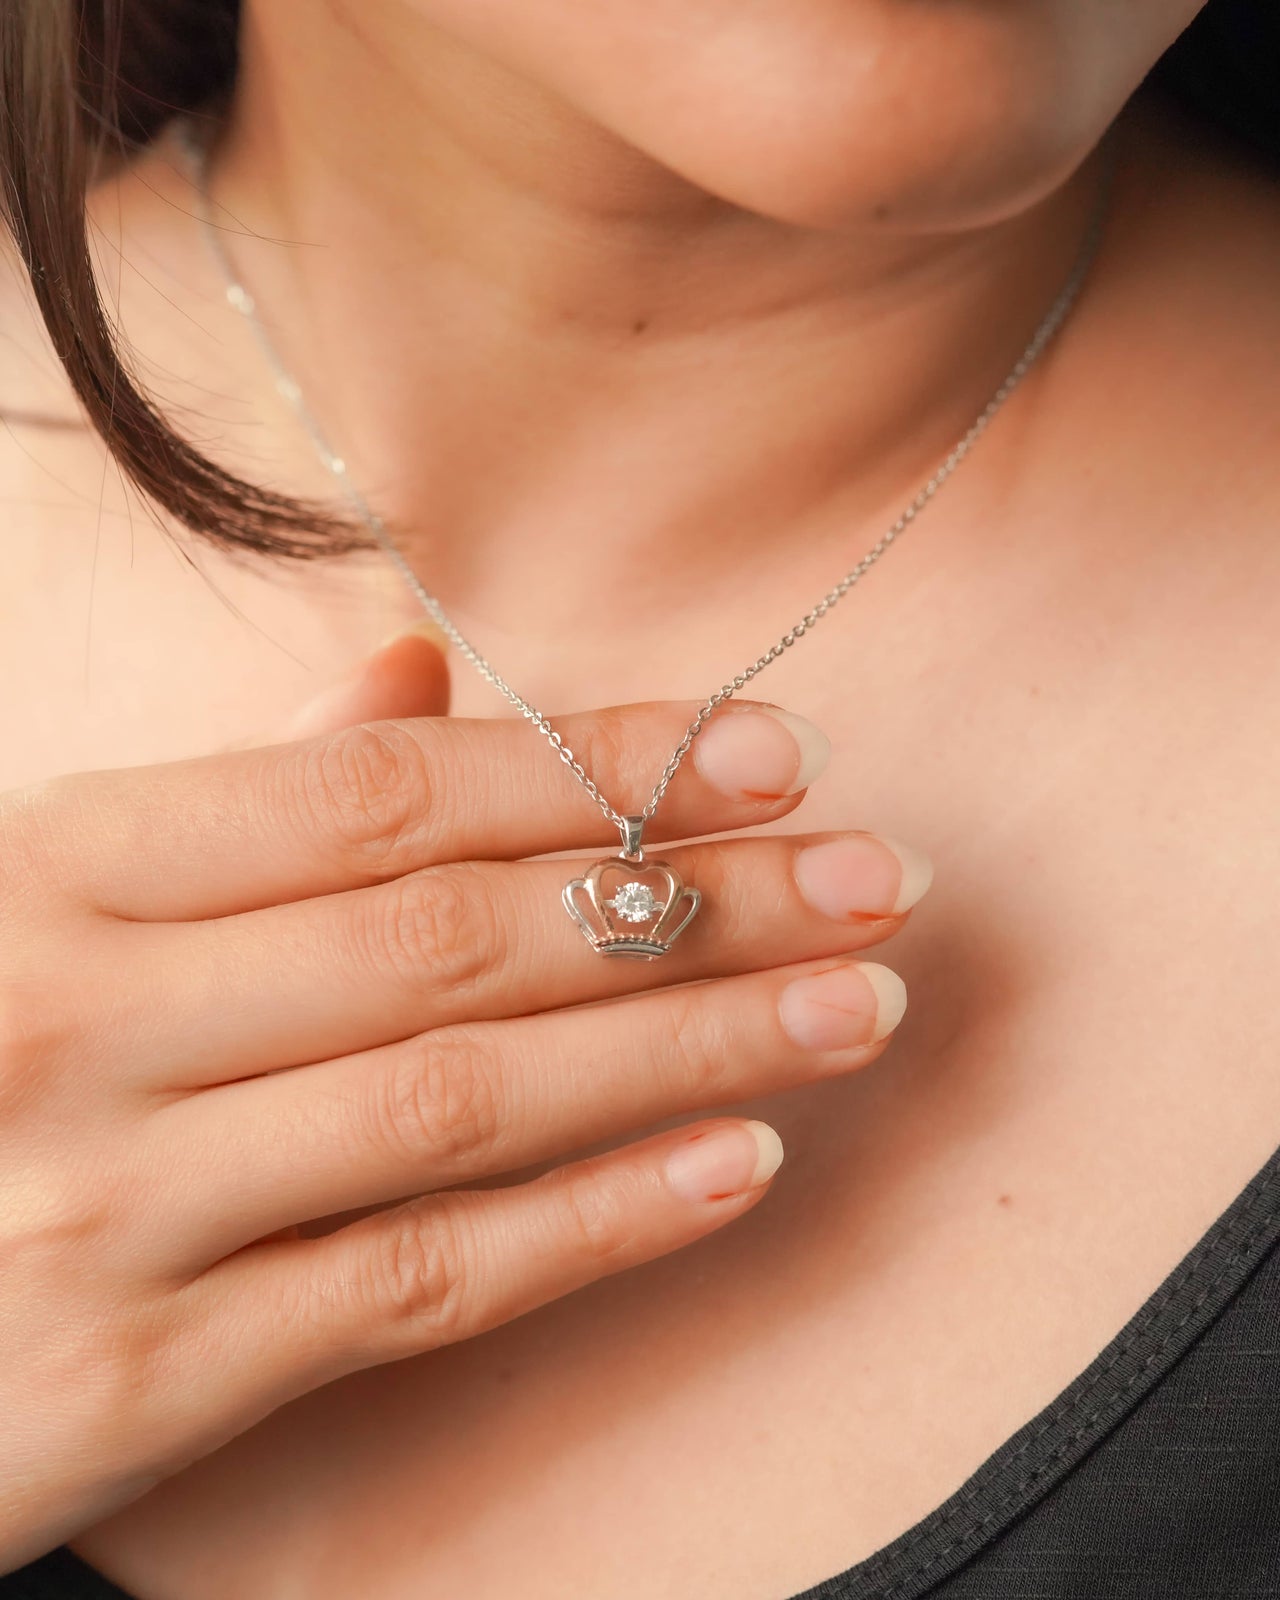 Buy Women's Silver Choker Necklace Online - Shyle